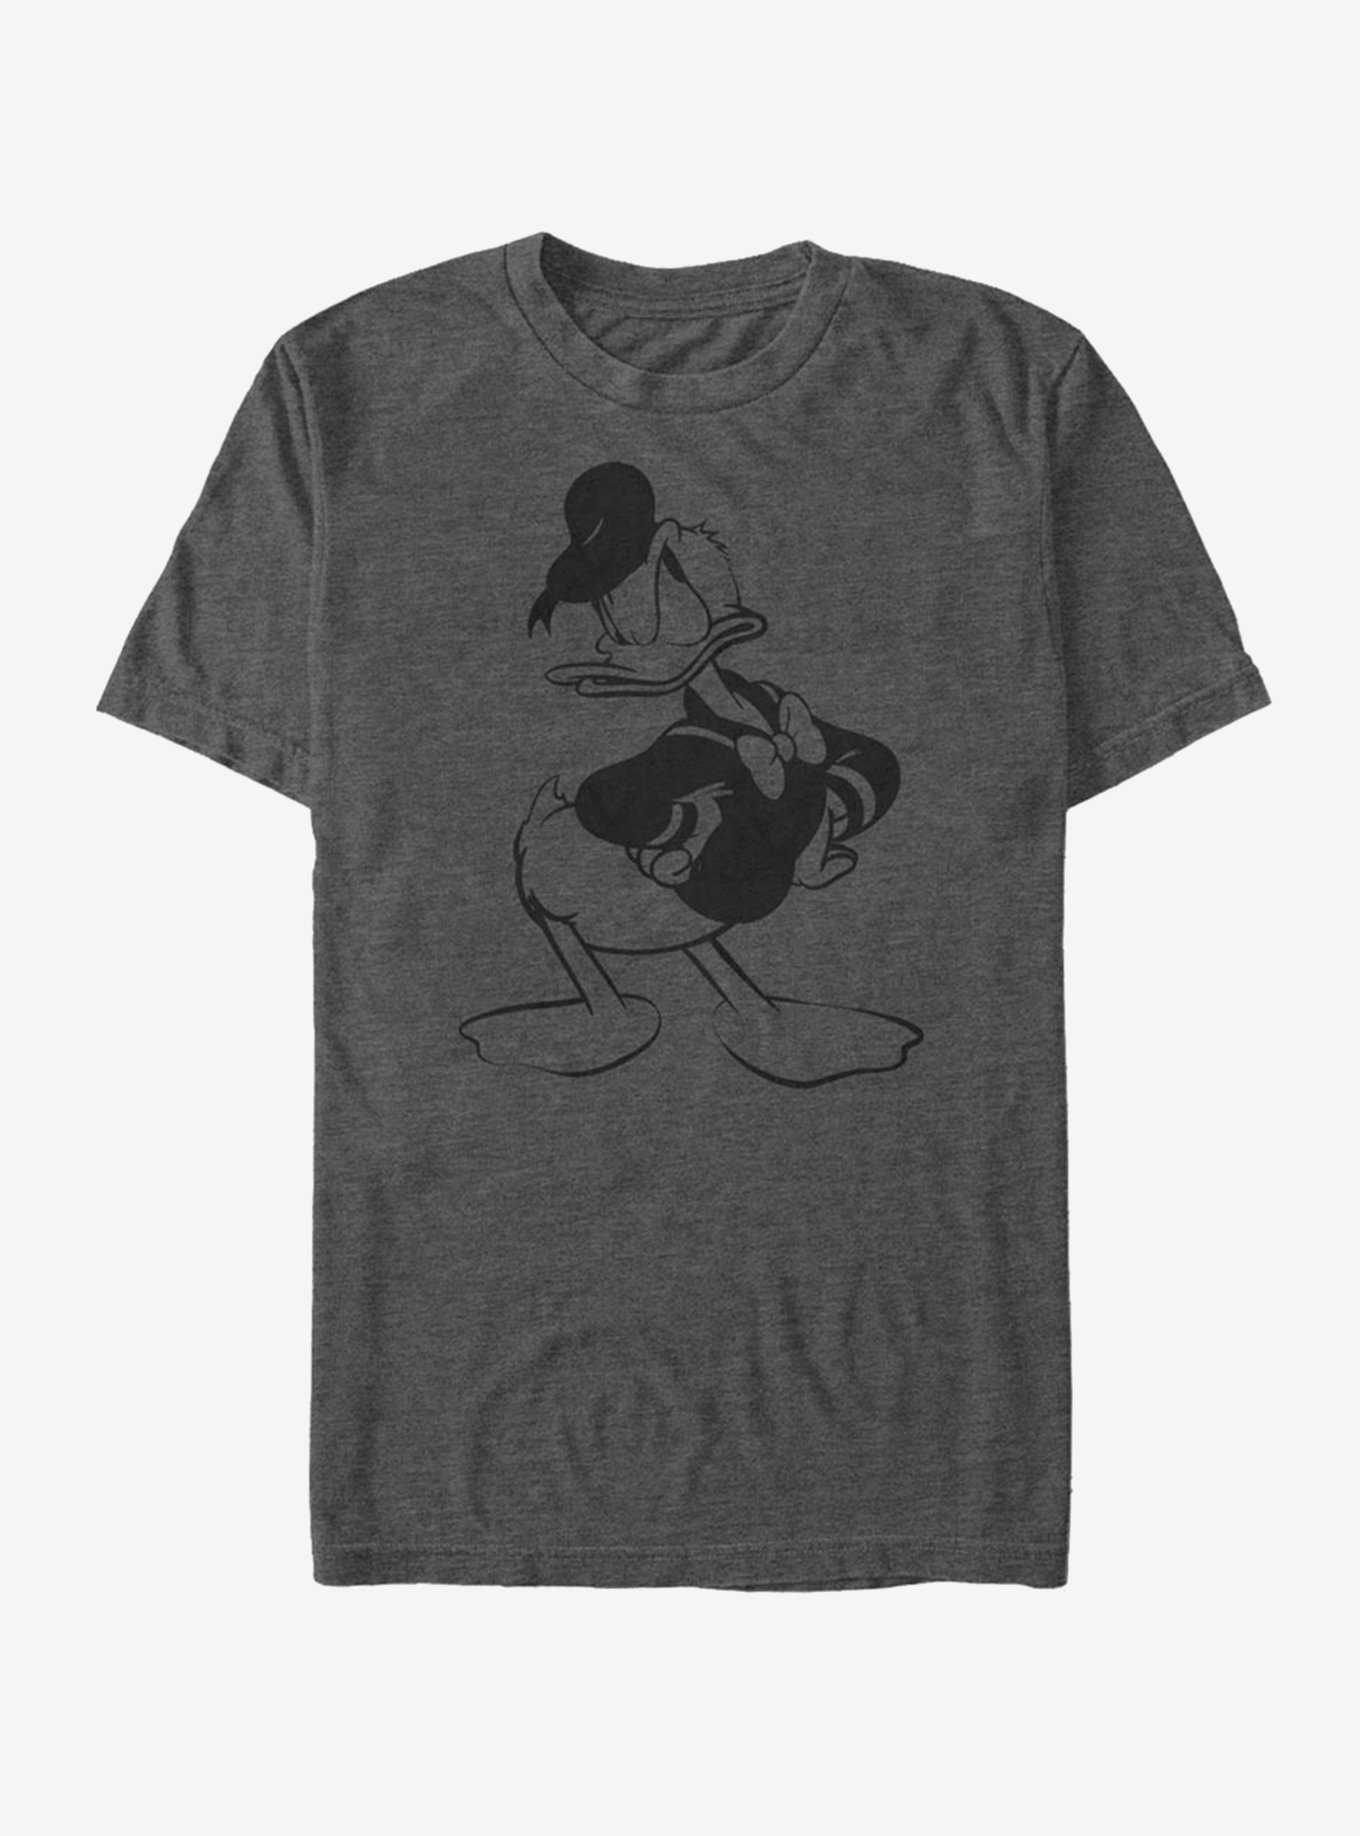 Disney Donald Duck Old Print Donald T-Shirt, , hi-res